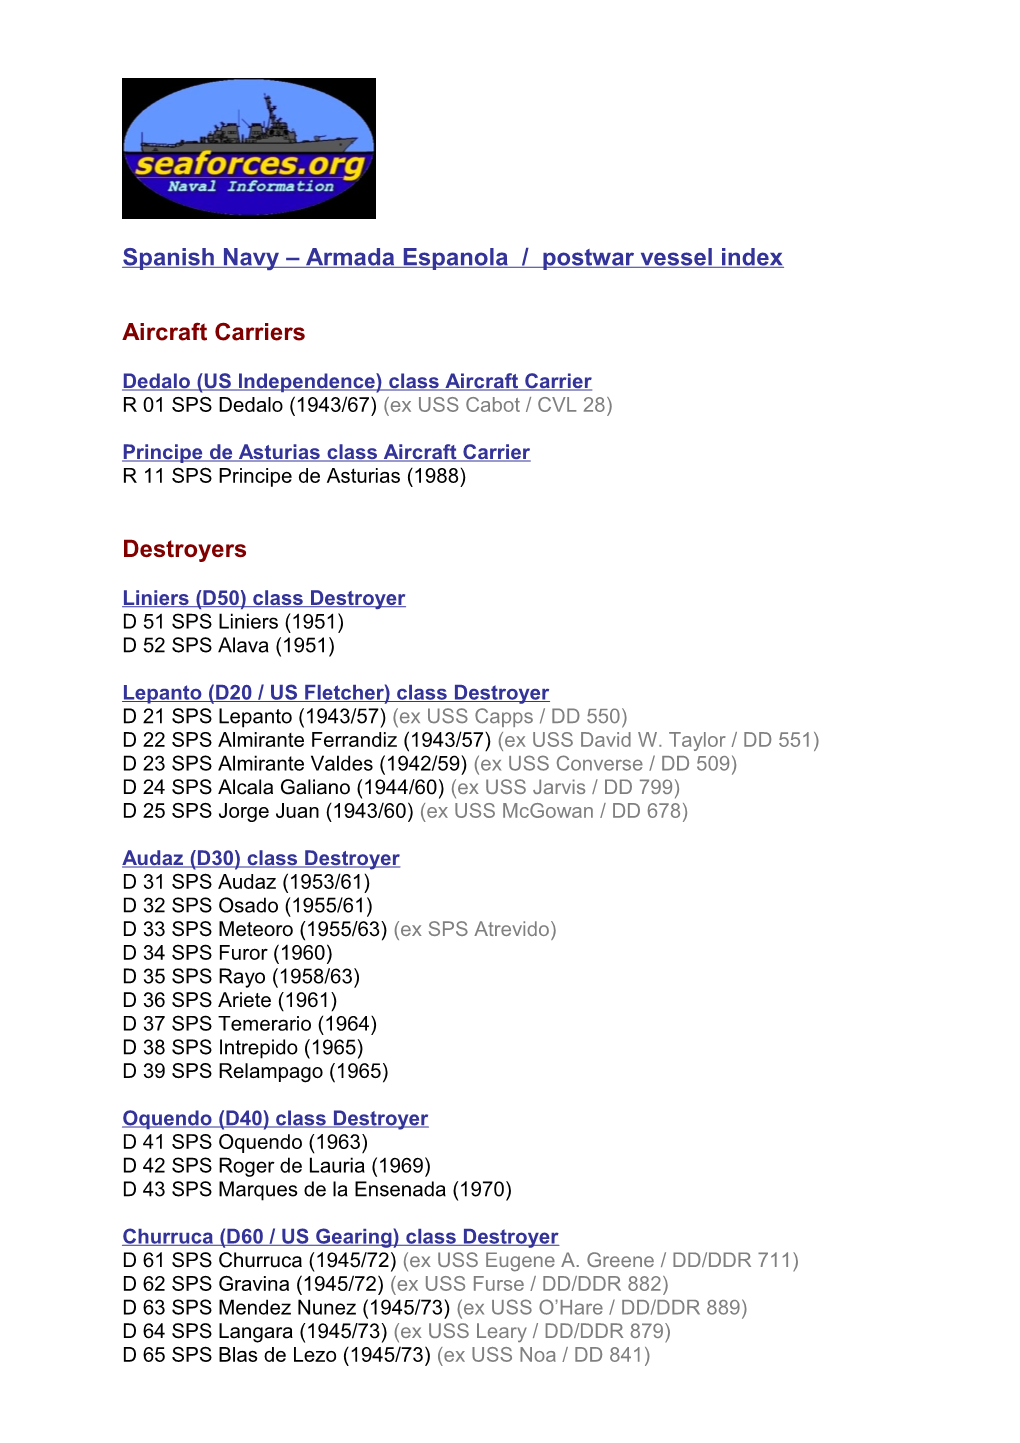 Spanish Navy Armada Espanola - Vessel Index - Seaforces Online